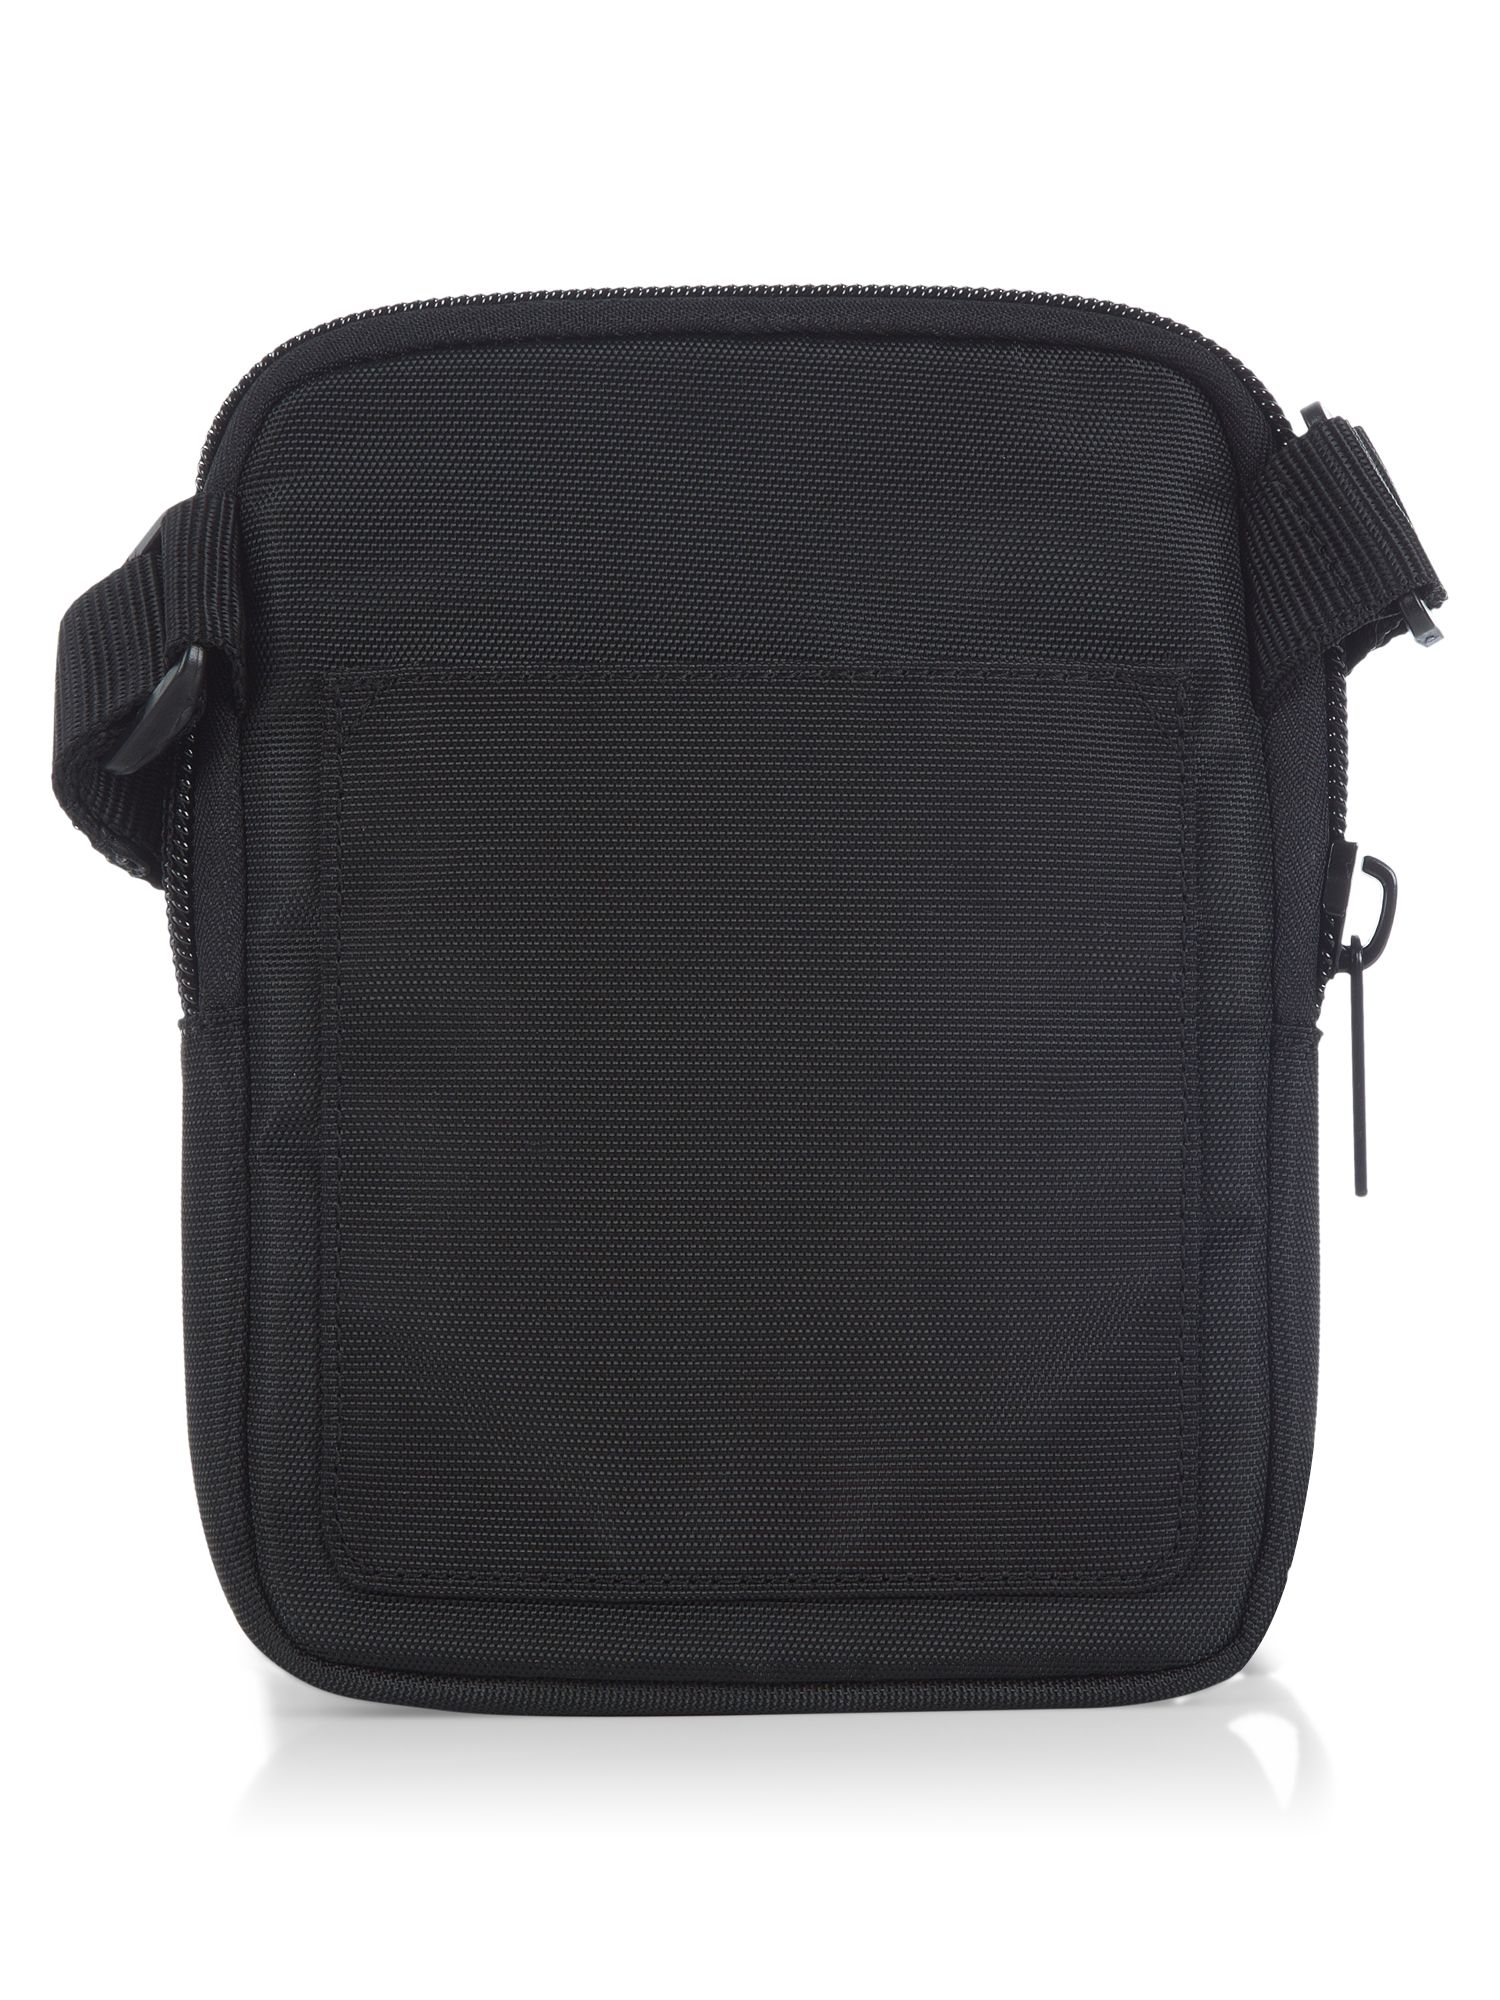 Lacoste Synthetic Medium Messenger Bag in Black for Men - Lyst